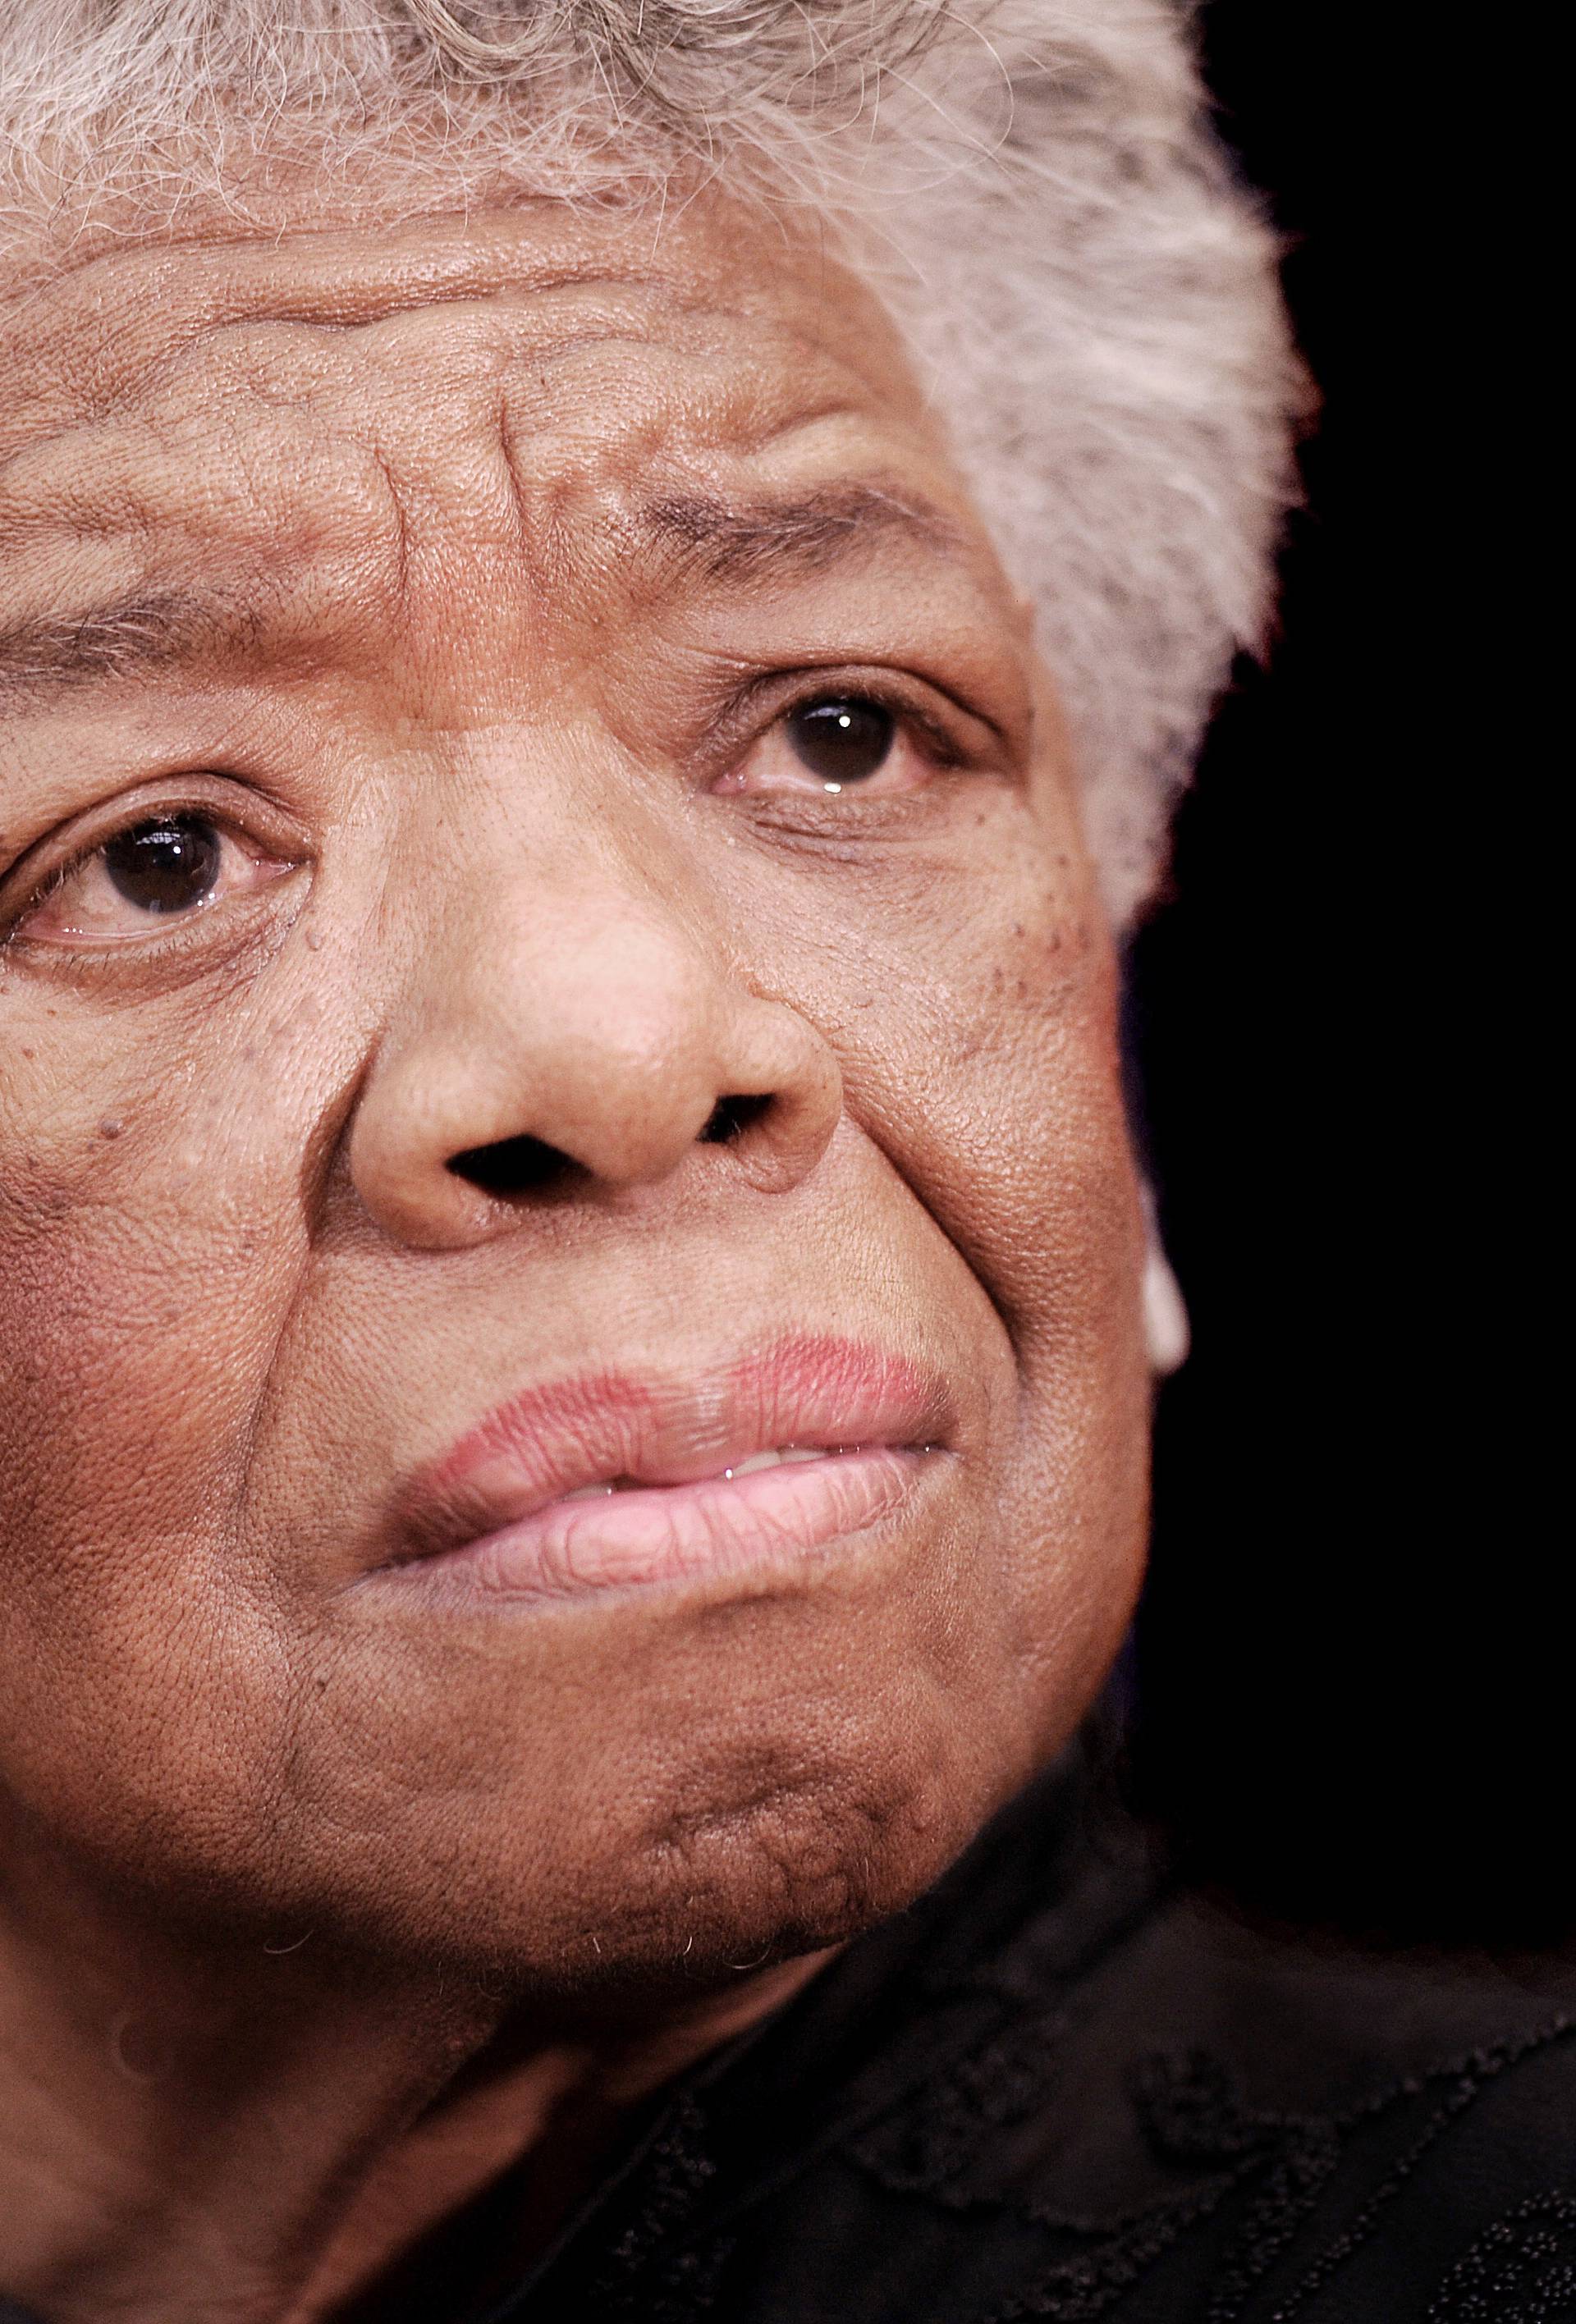 Maya Angelou, renowned poet, novelist and actress, died this morning at age 86 - Washington